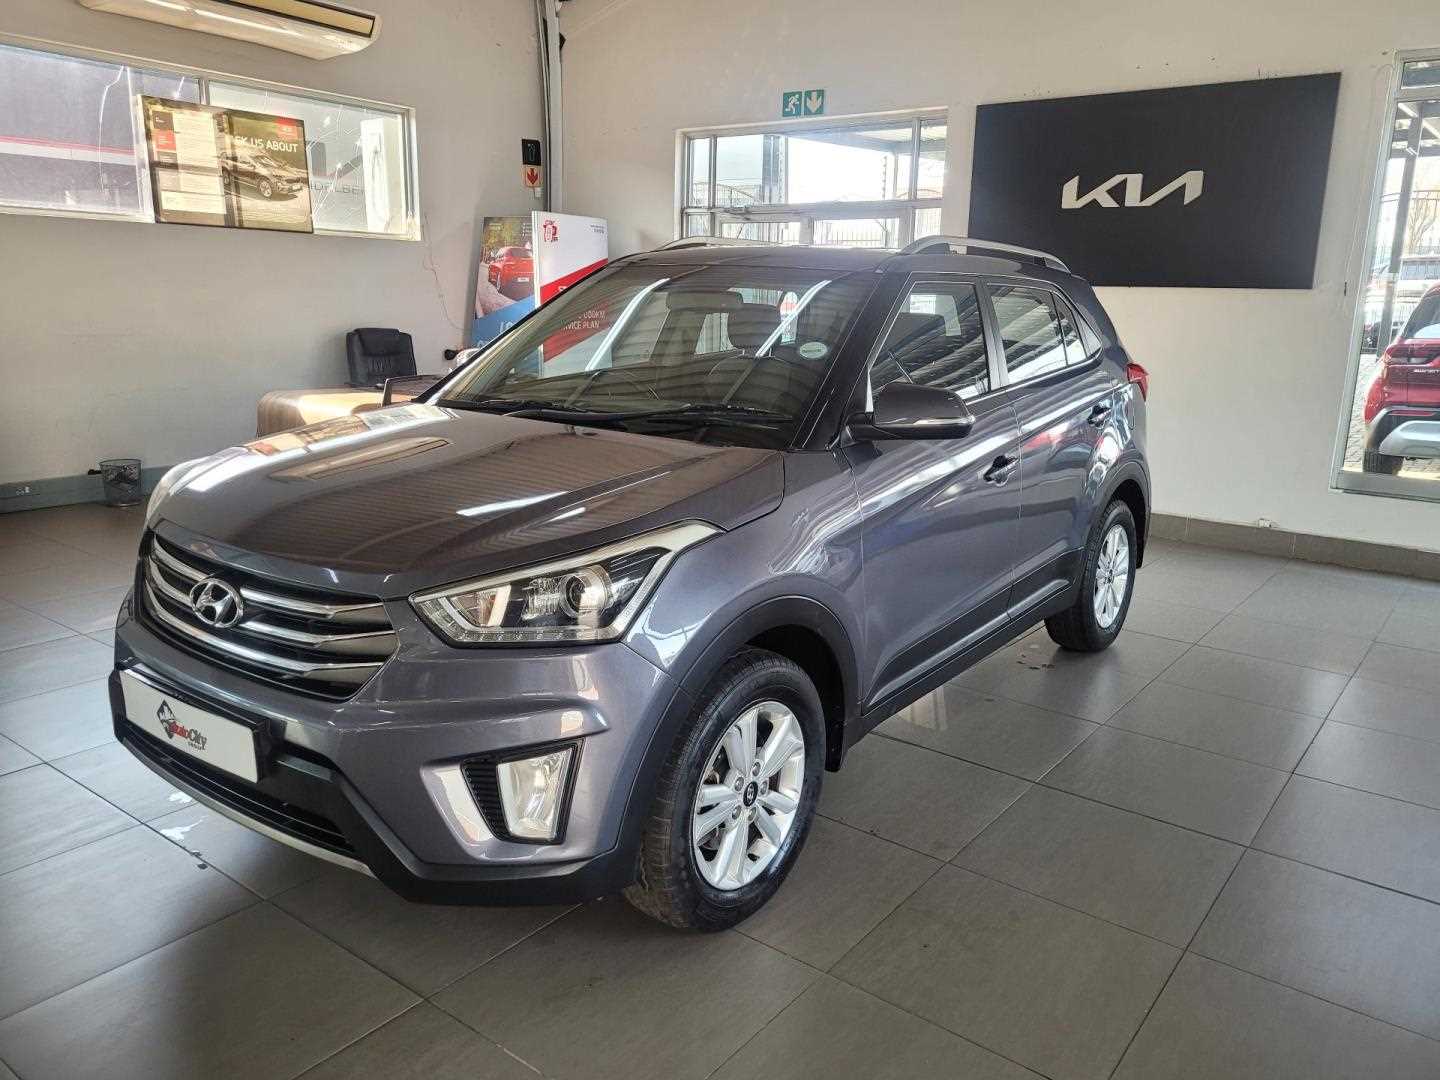 2017 Hyundai Creta 1.6 Executive At for sale - 337961